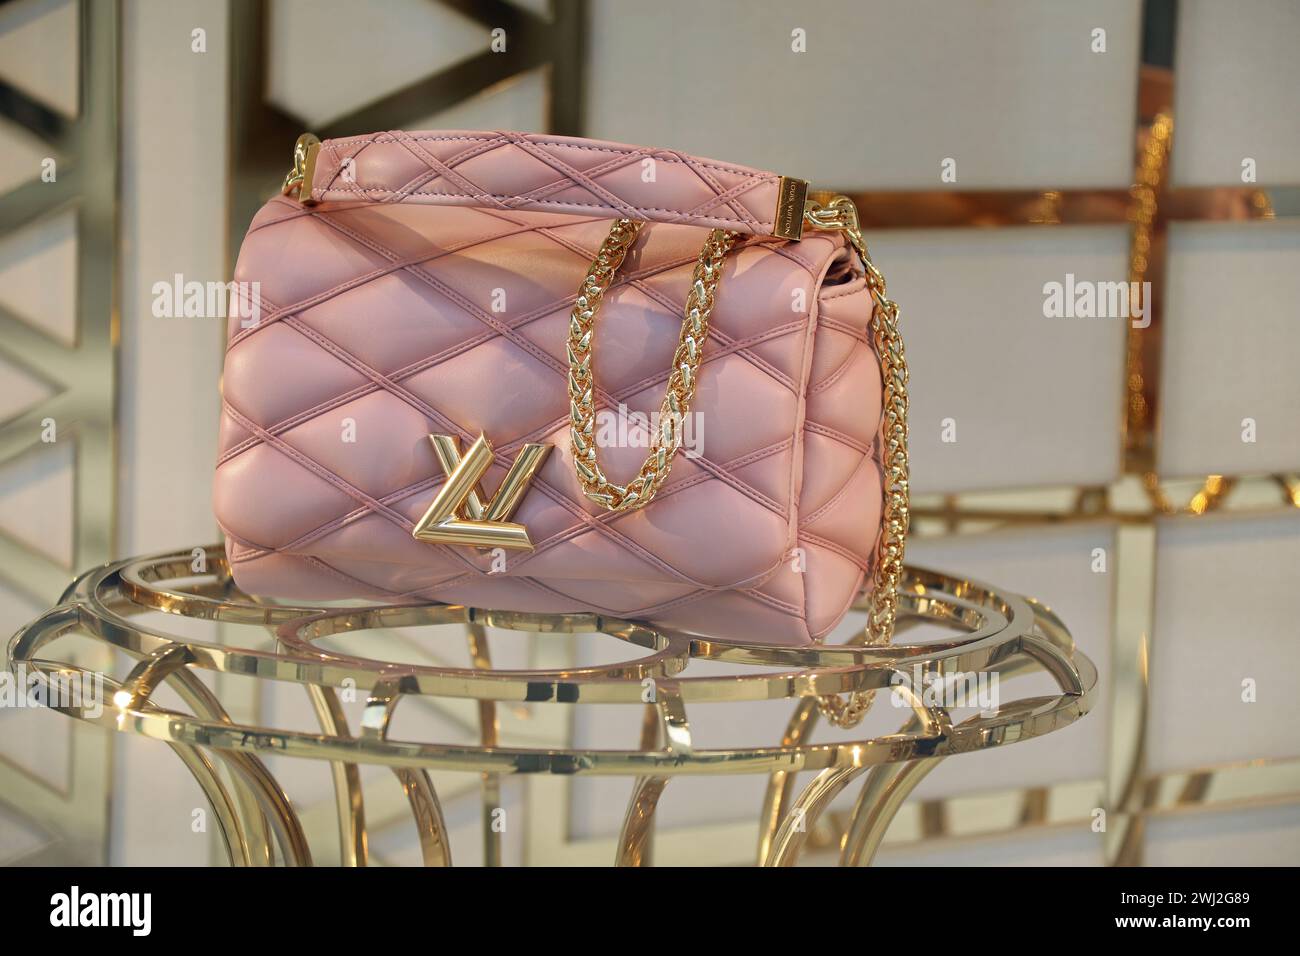 Powder pink Louis Vuitton bag in a shop window Stock Photo